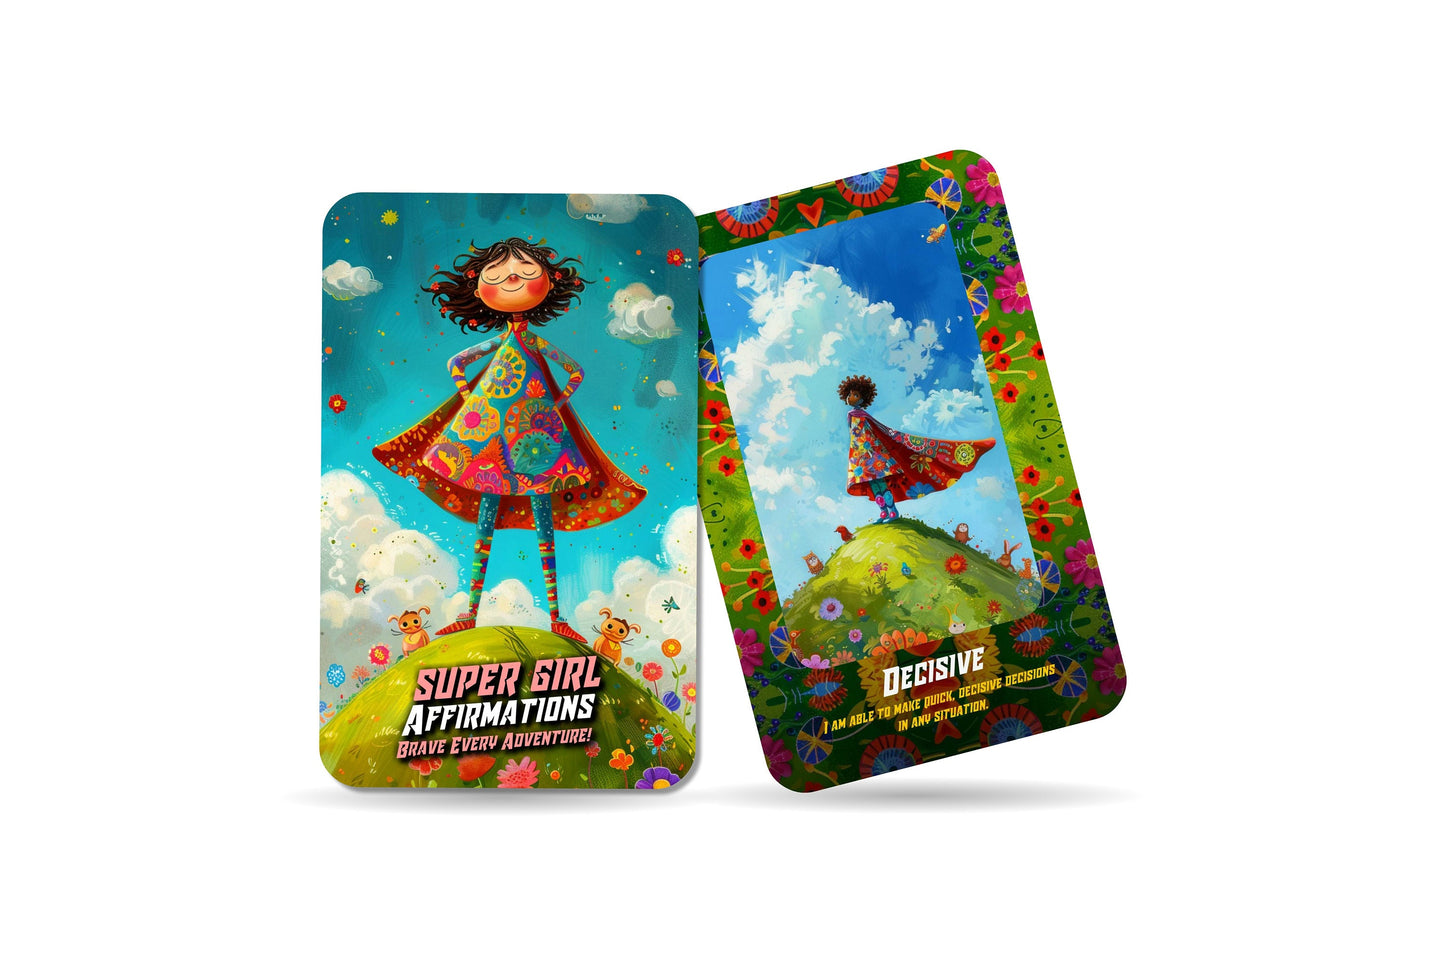 Super Girl Affirmations - Brave Every Adventure! Kids Affirmation Cards